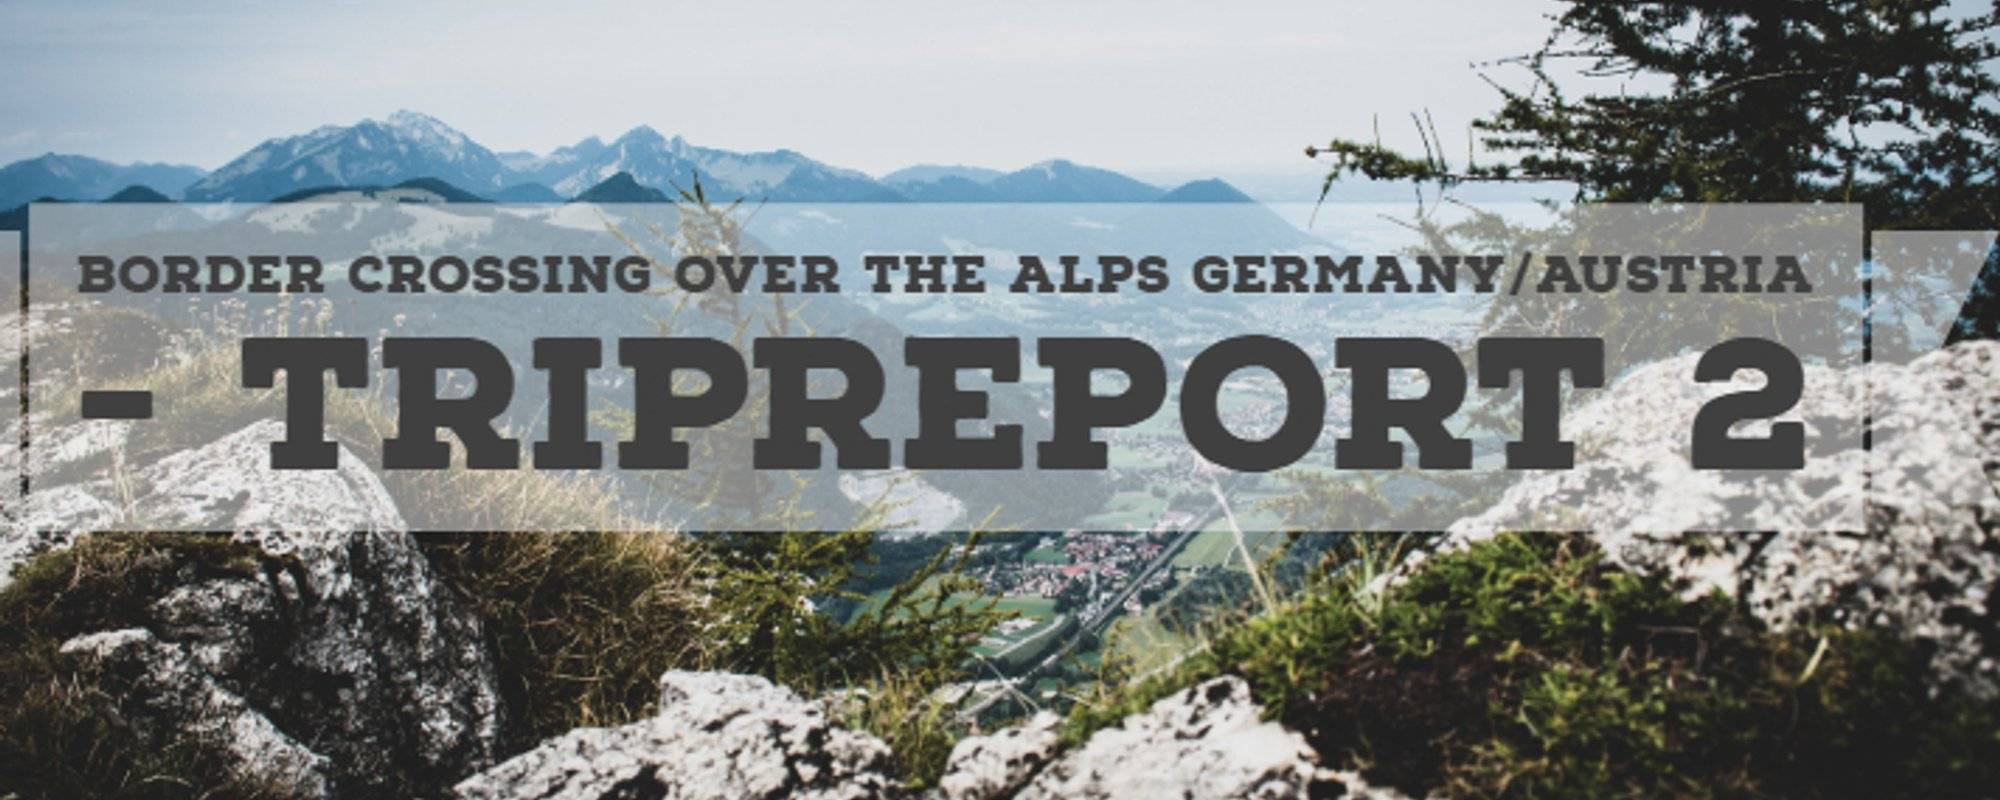 Tripreport 2 - Border crossing over the alps Germany/Austria - Kranzhorn